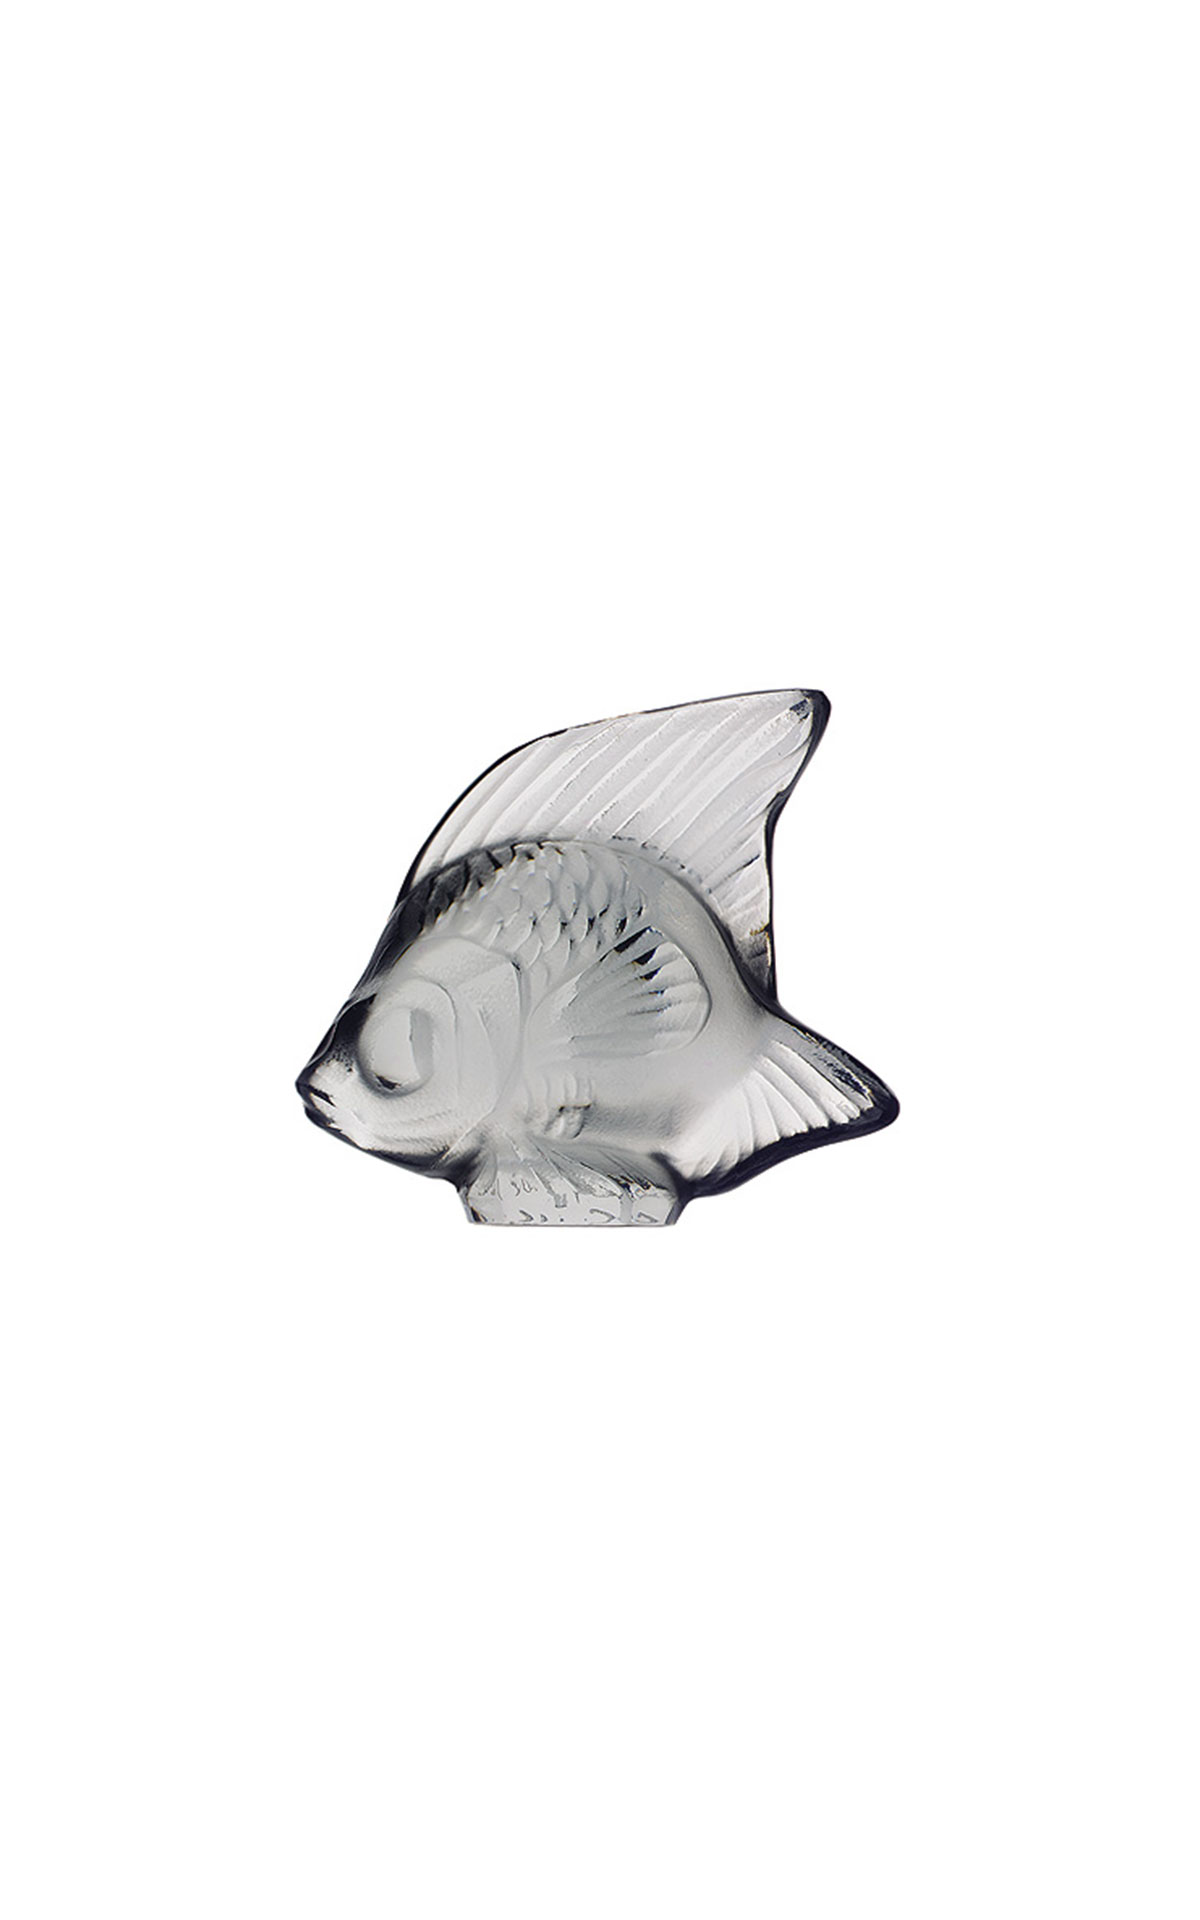 Lalique Cachet poisson gris from Bicester Village